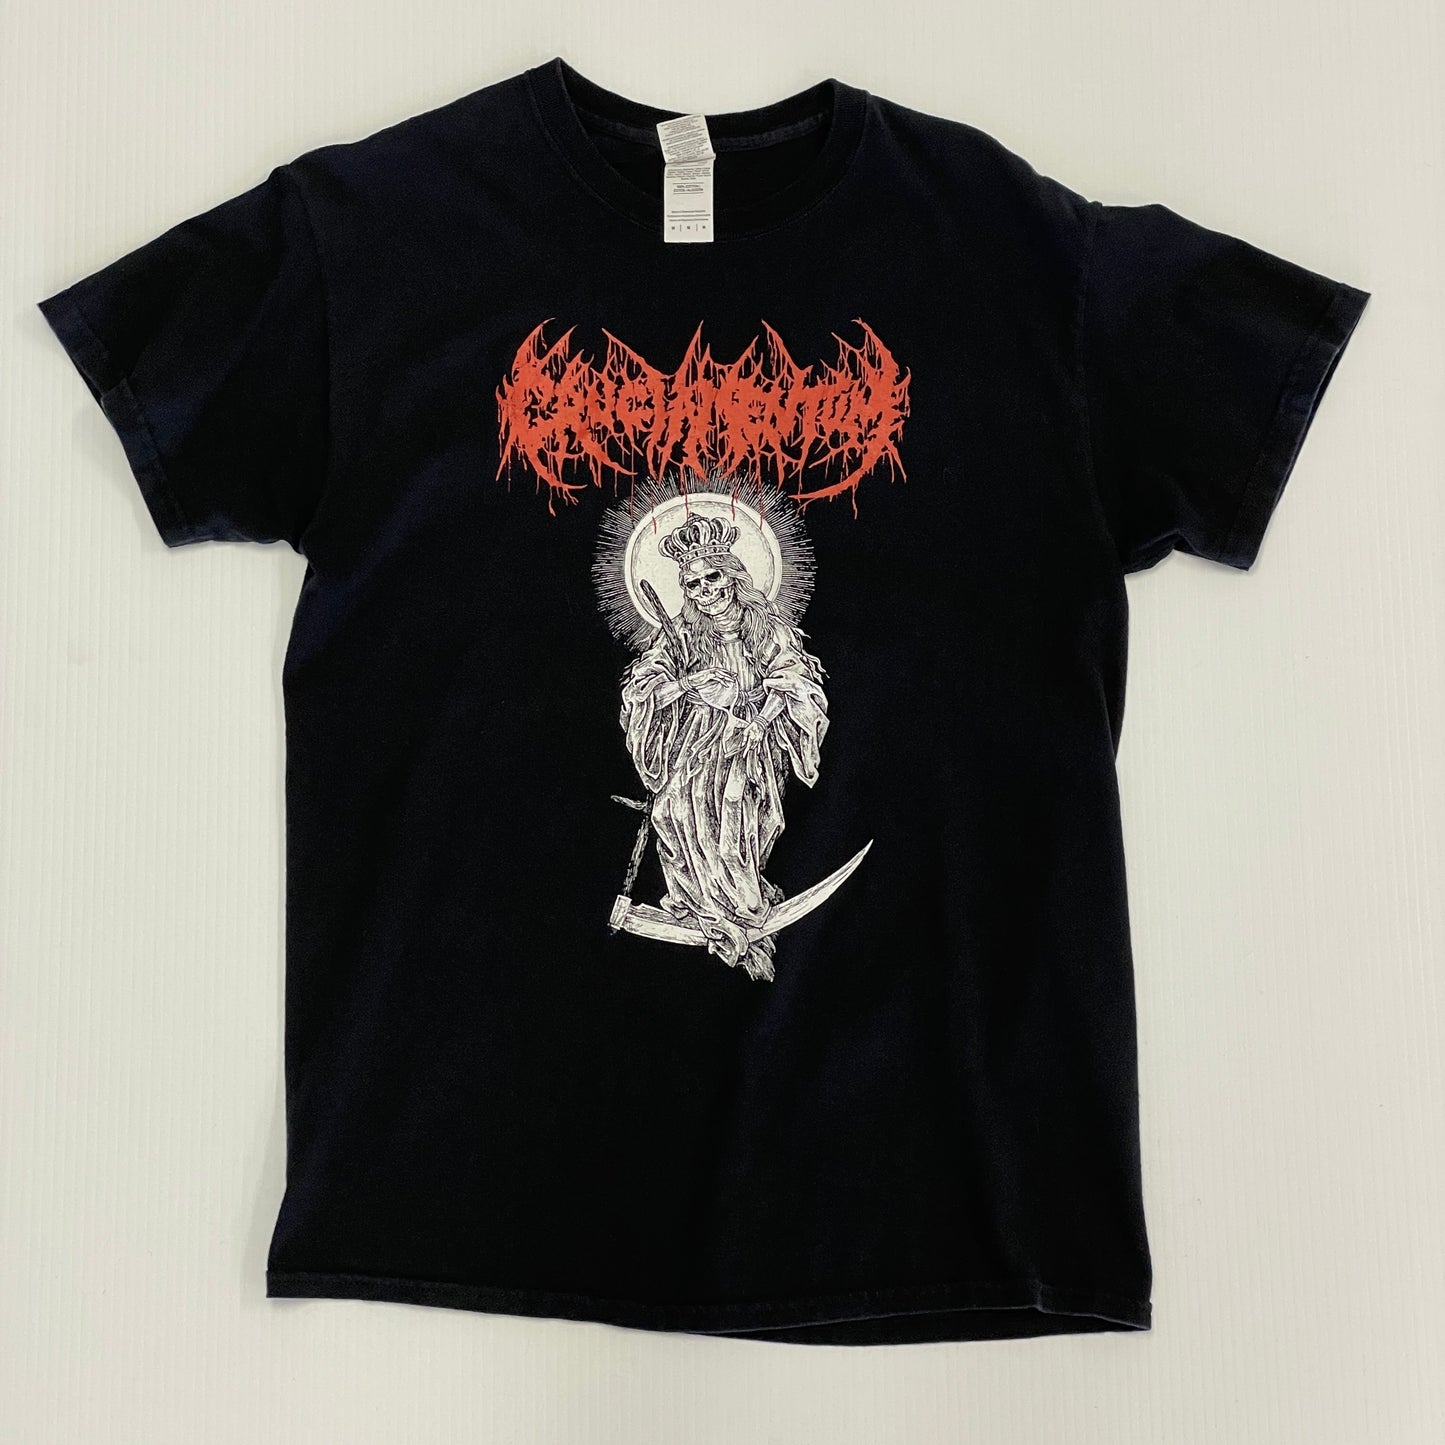 Cruciamentum - Reaper T-shirt size Medium